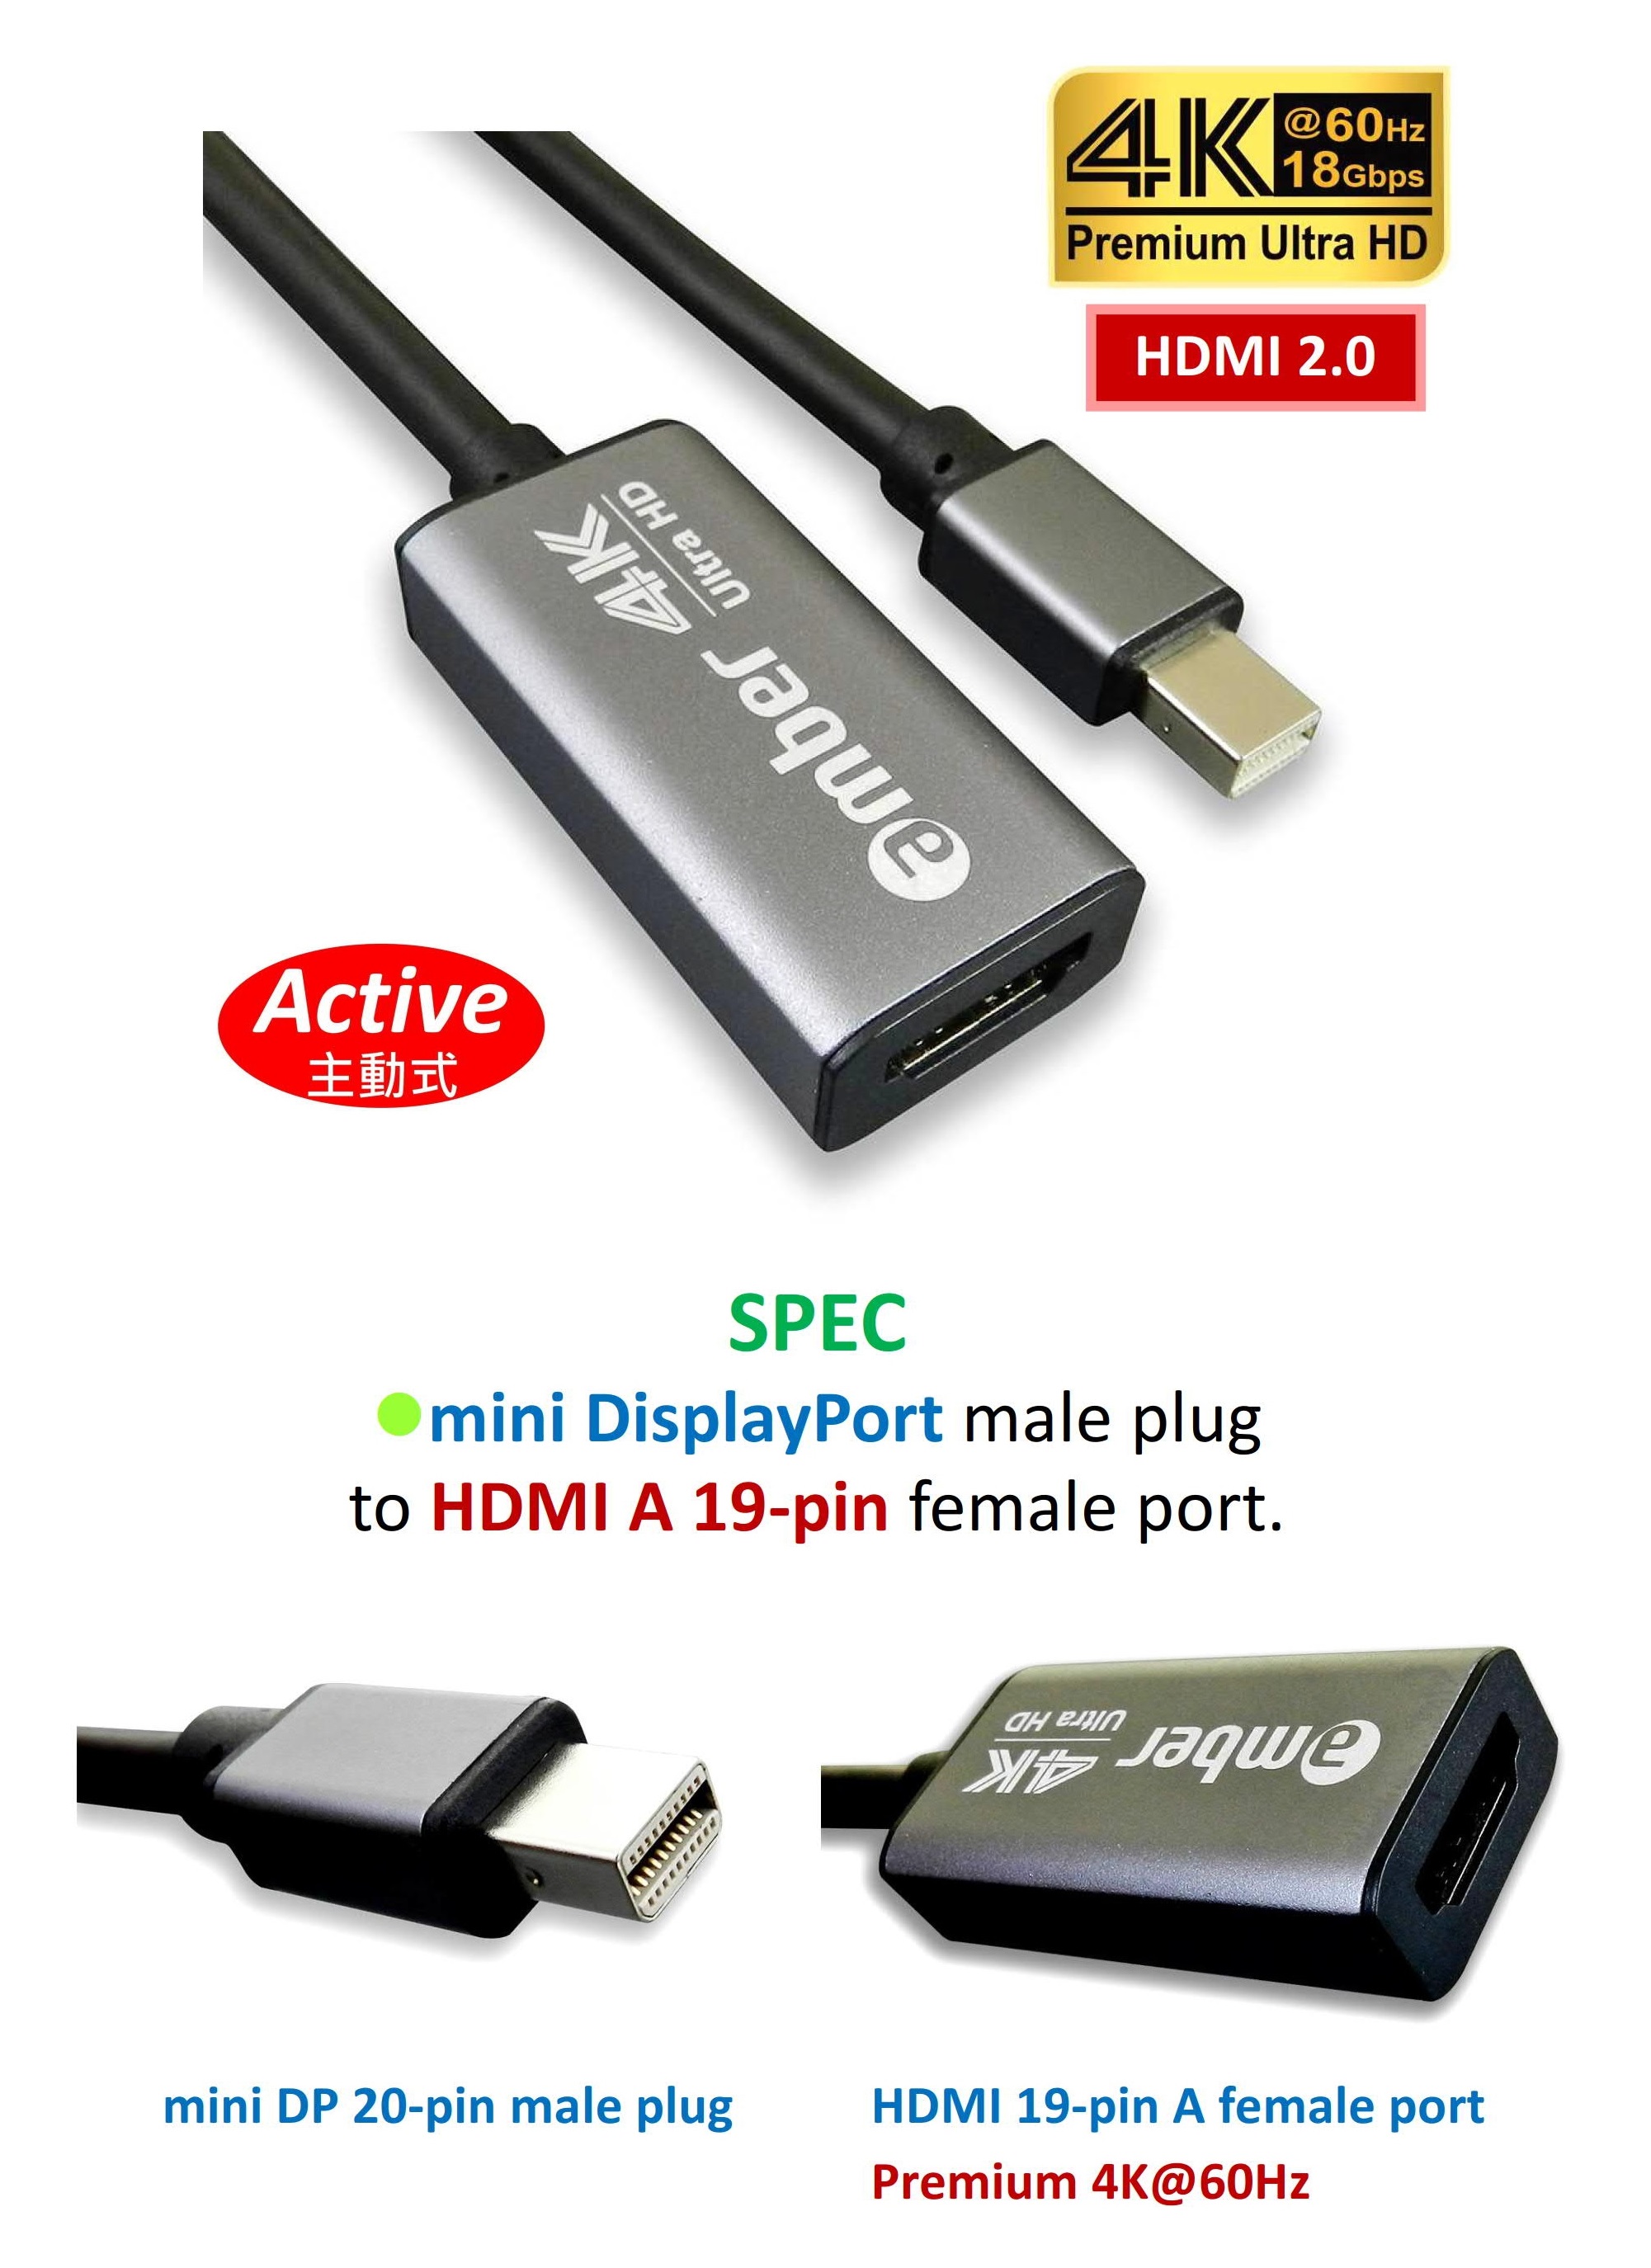 Active Adapter mini DisplayPort to HDMI 2.0 4K